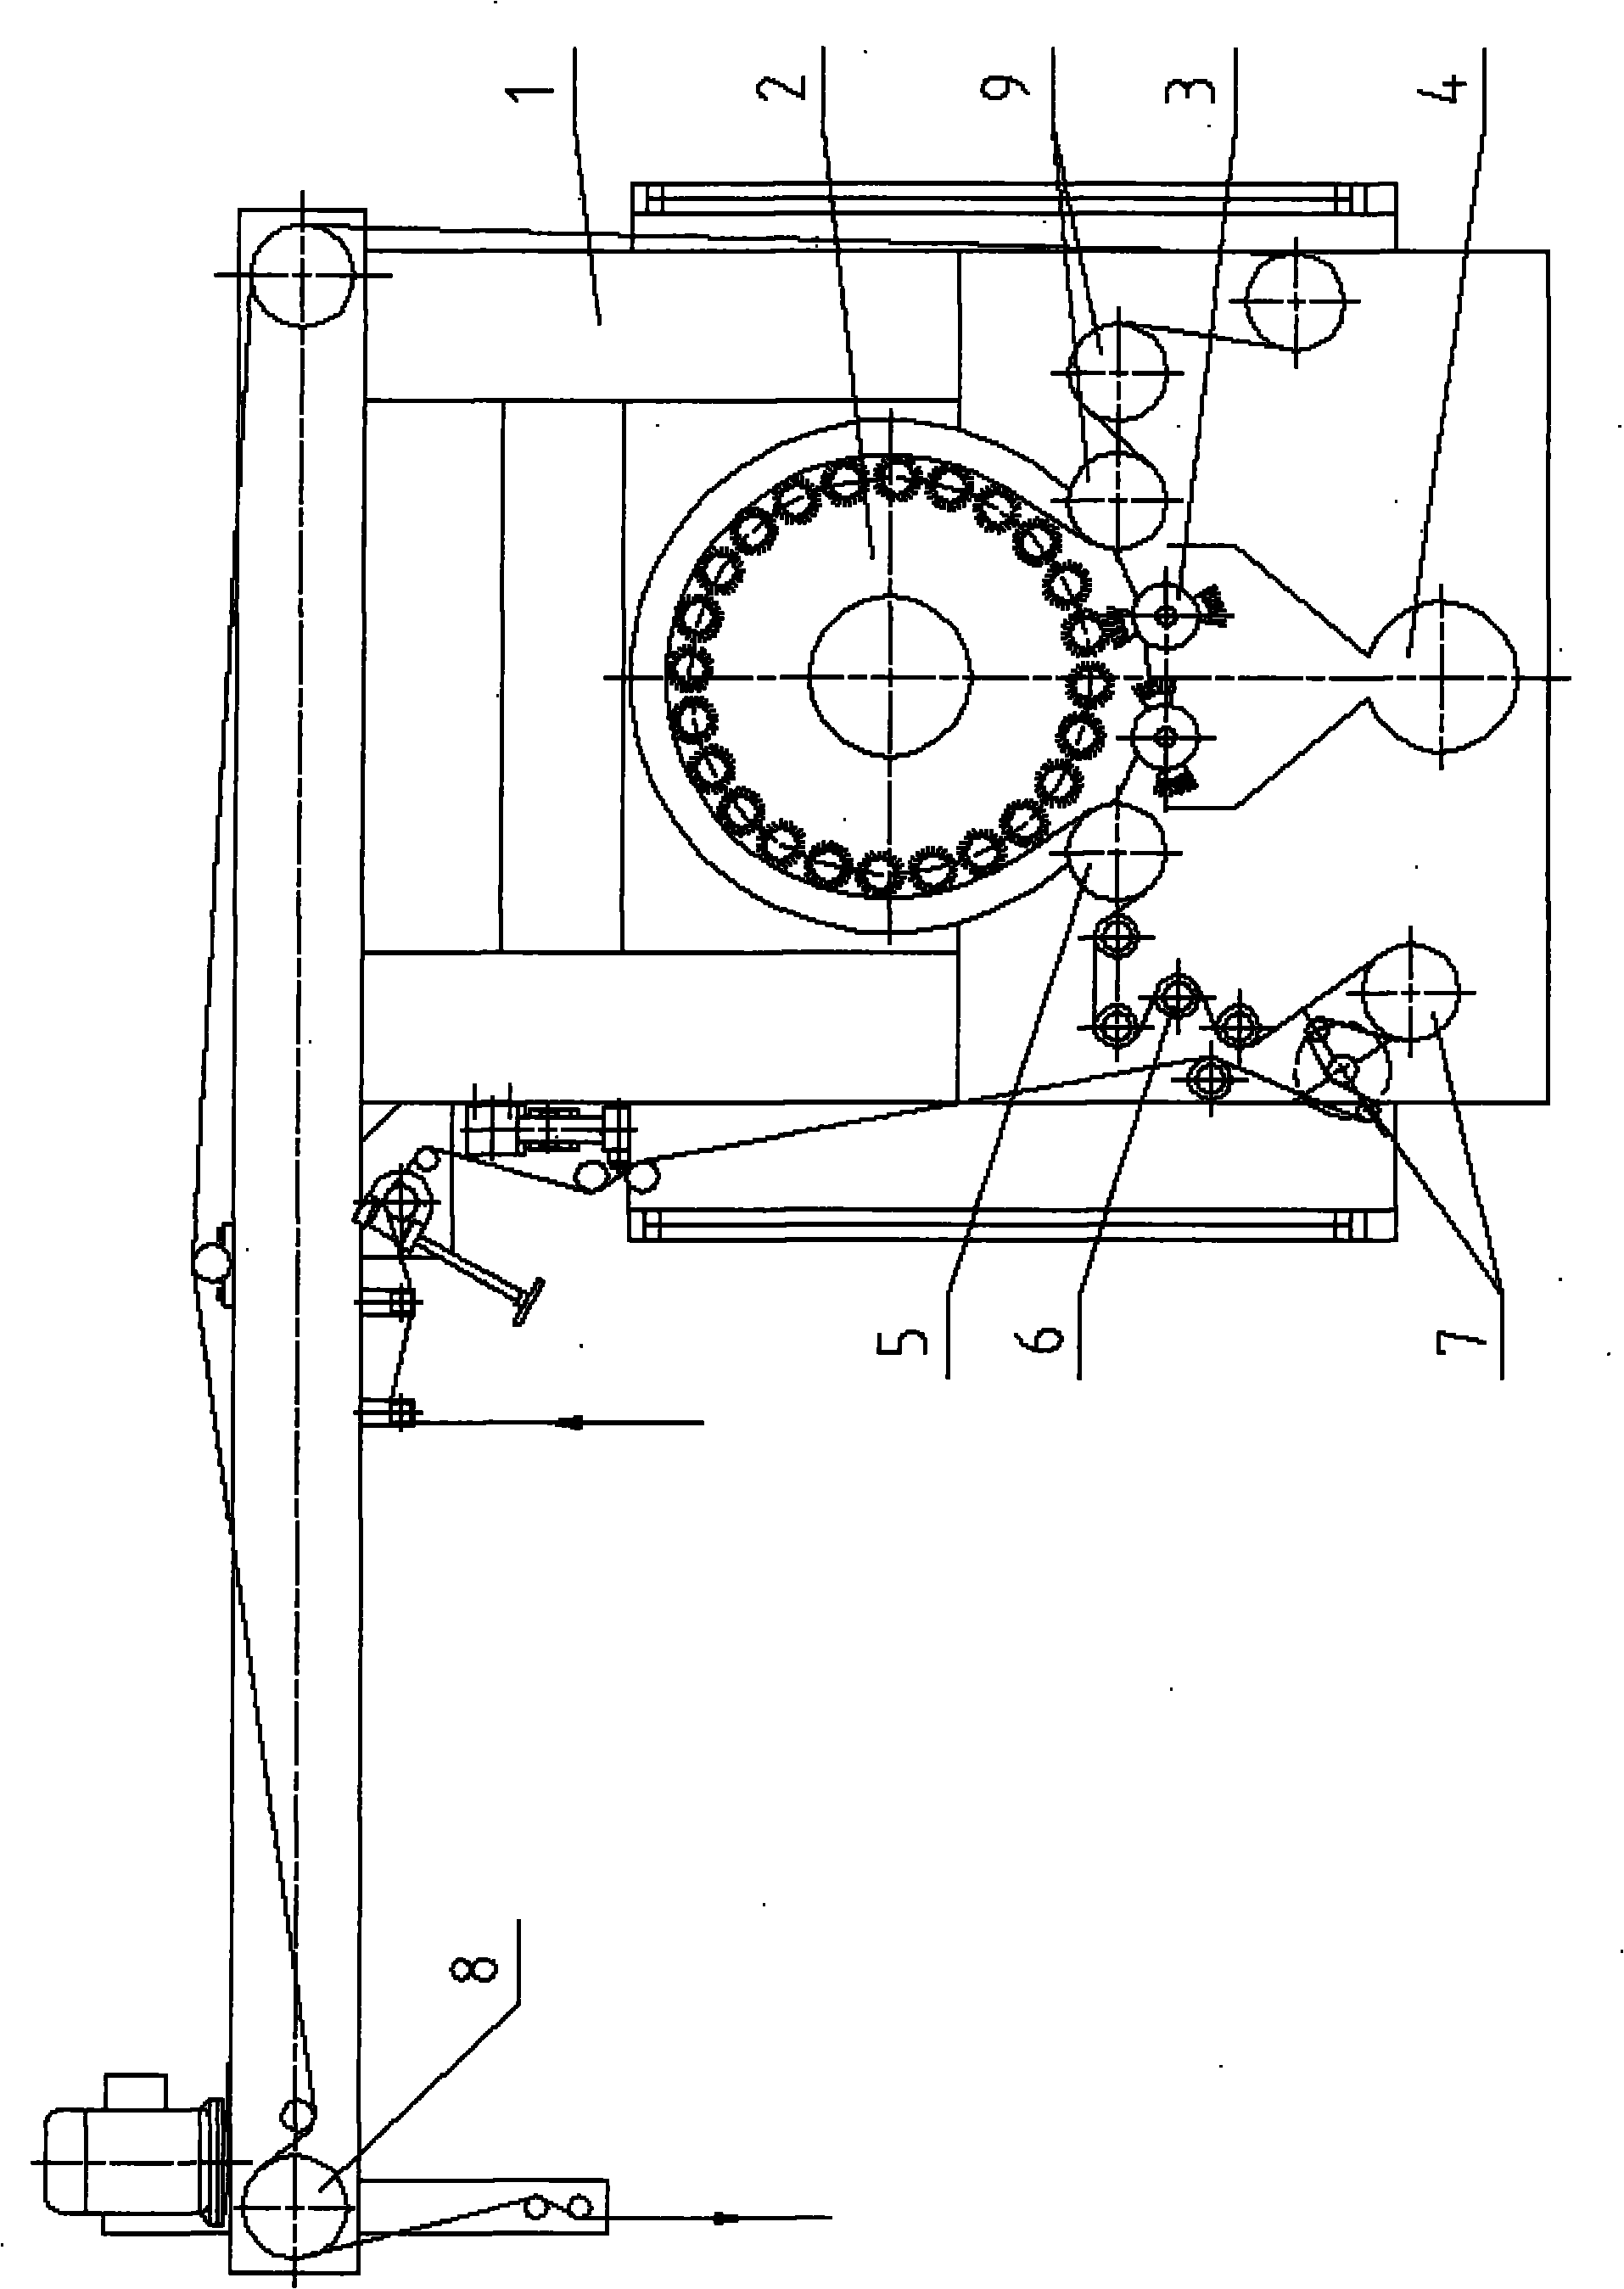 Novel computer-controlled bevel wheel roller raising machine